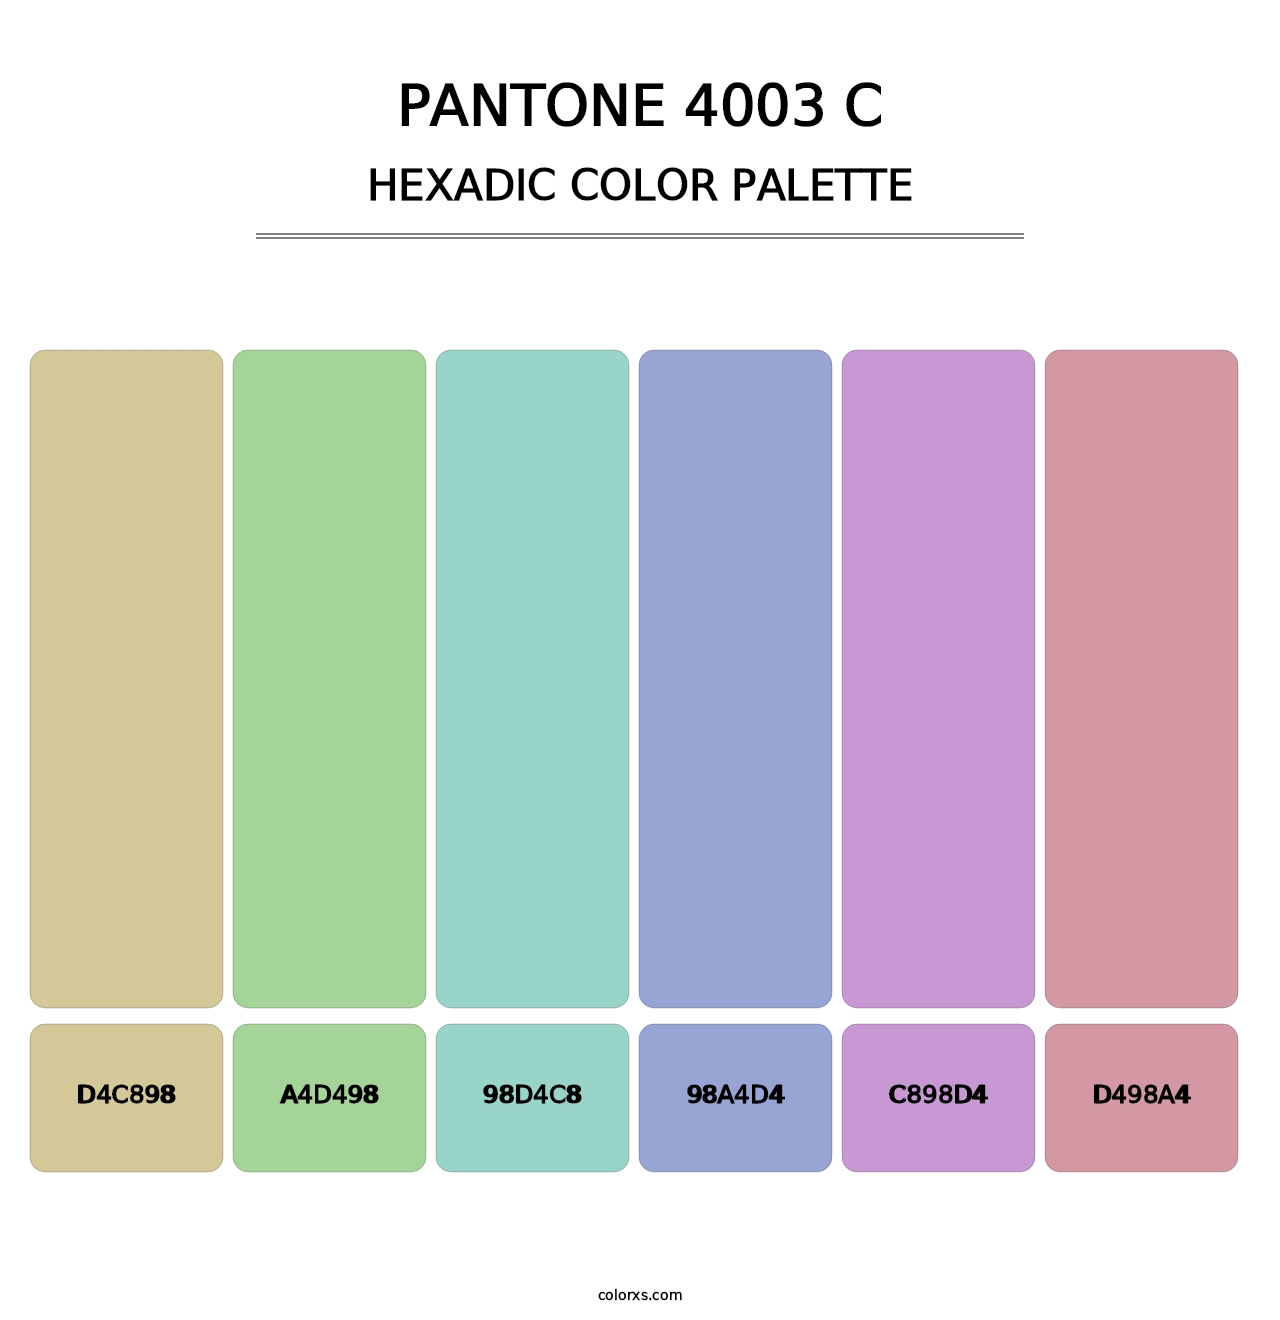 PANTONE 4003 C - Hexadic Color Palette